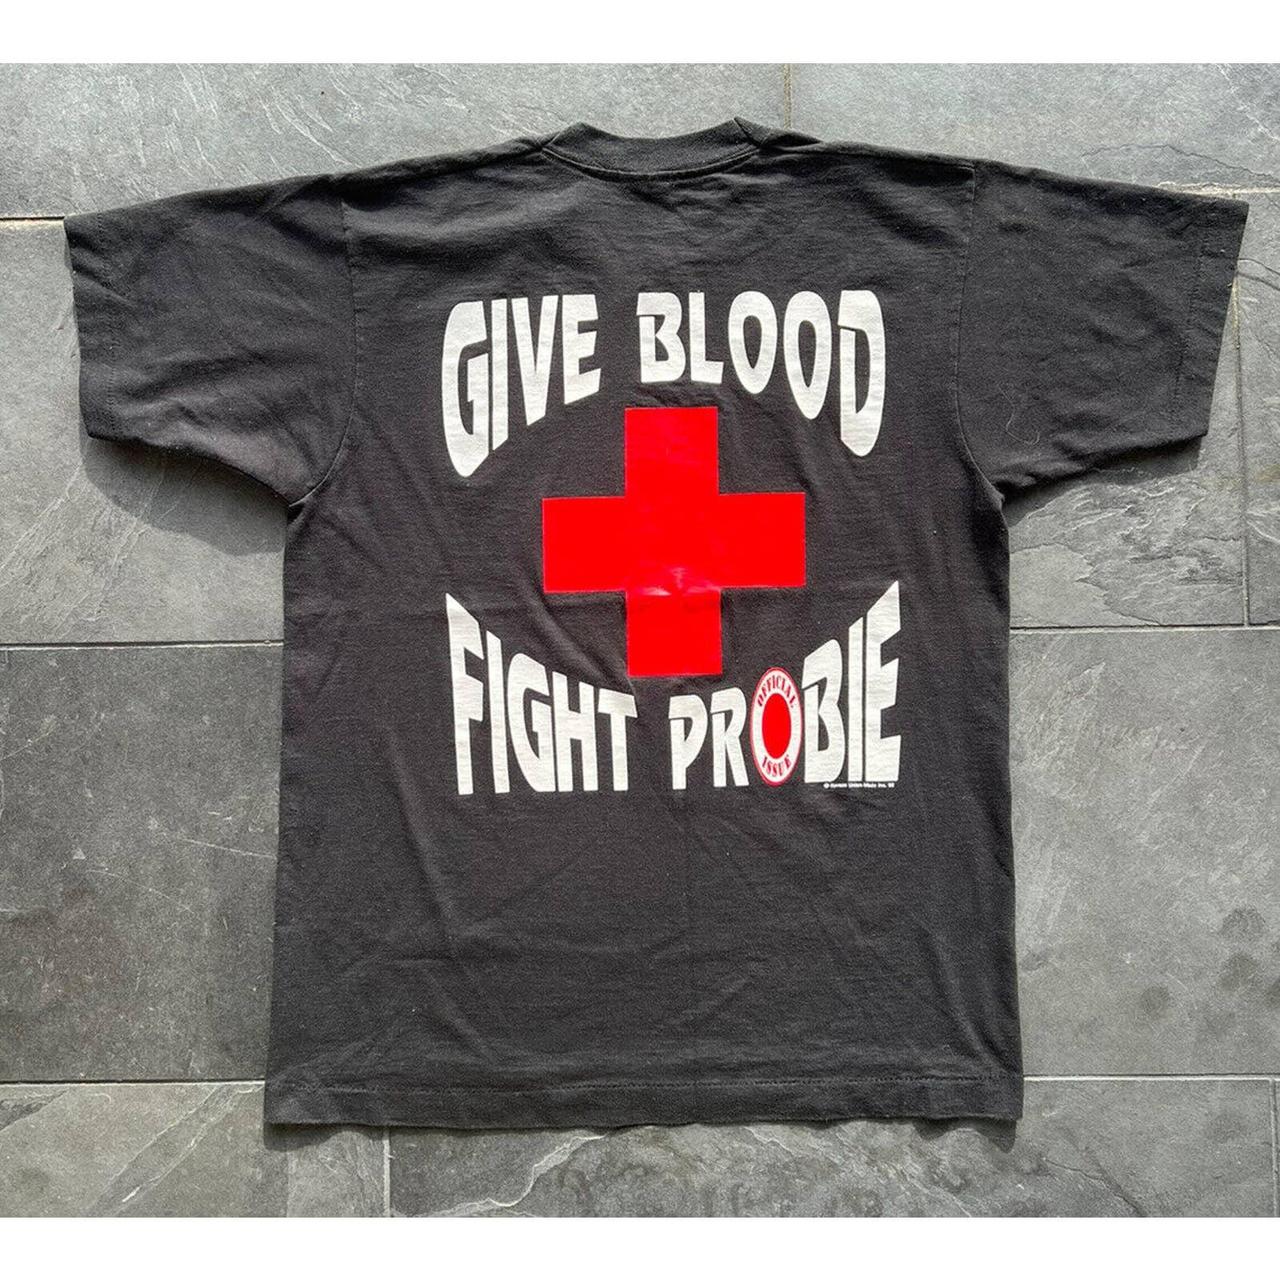 Bob Probert give blood fight probie shirt - Dalatshirt